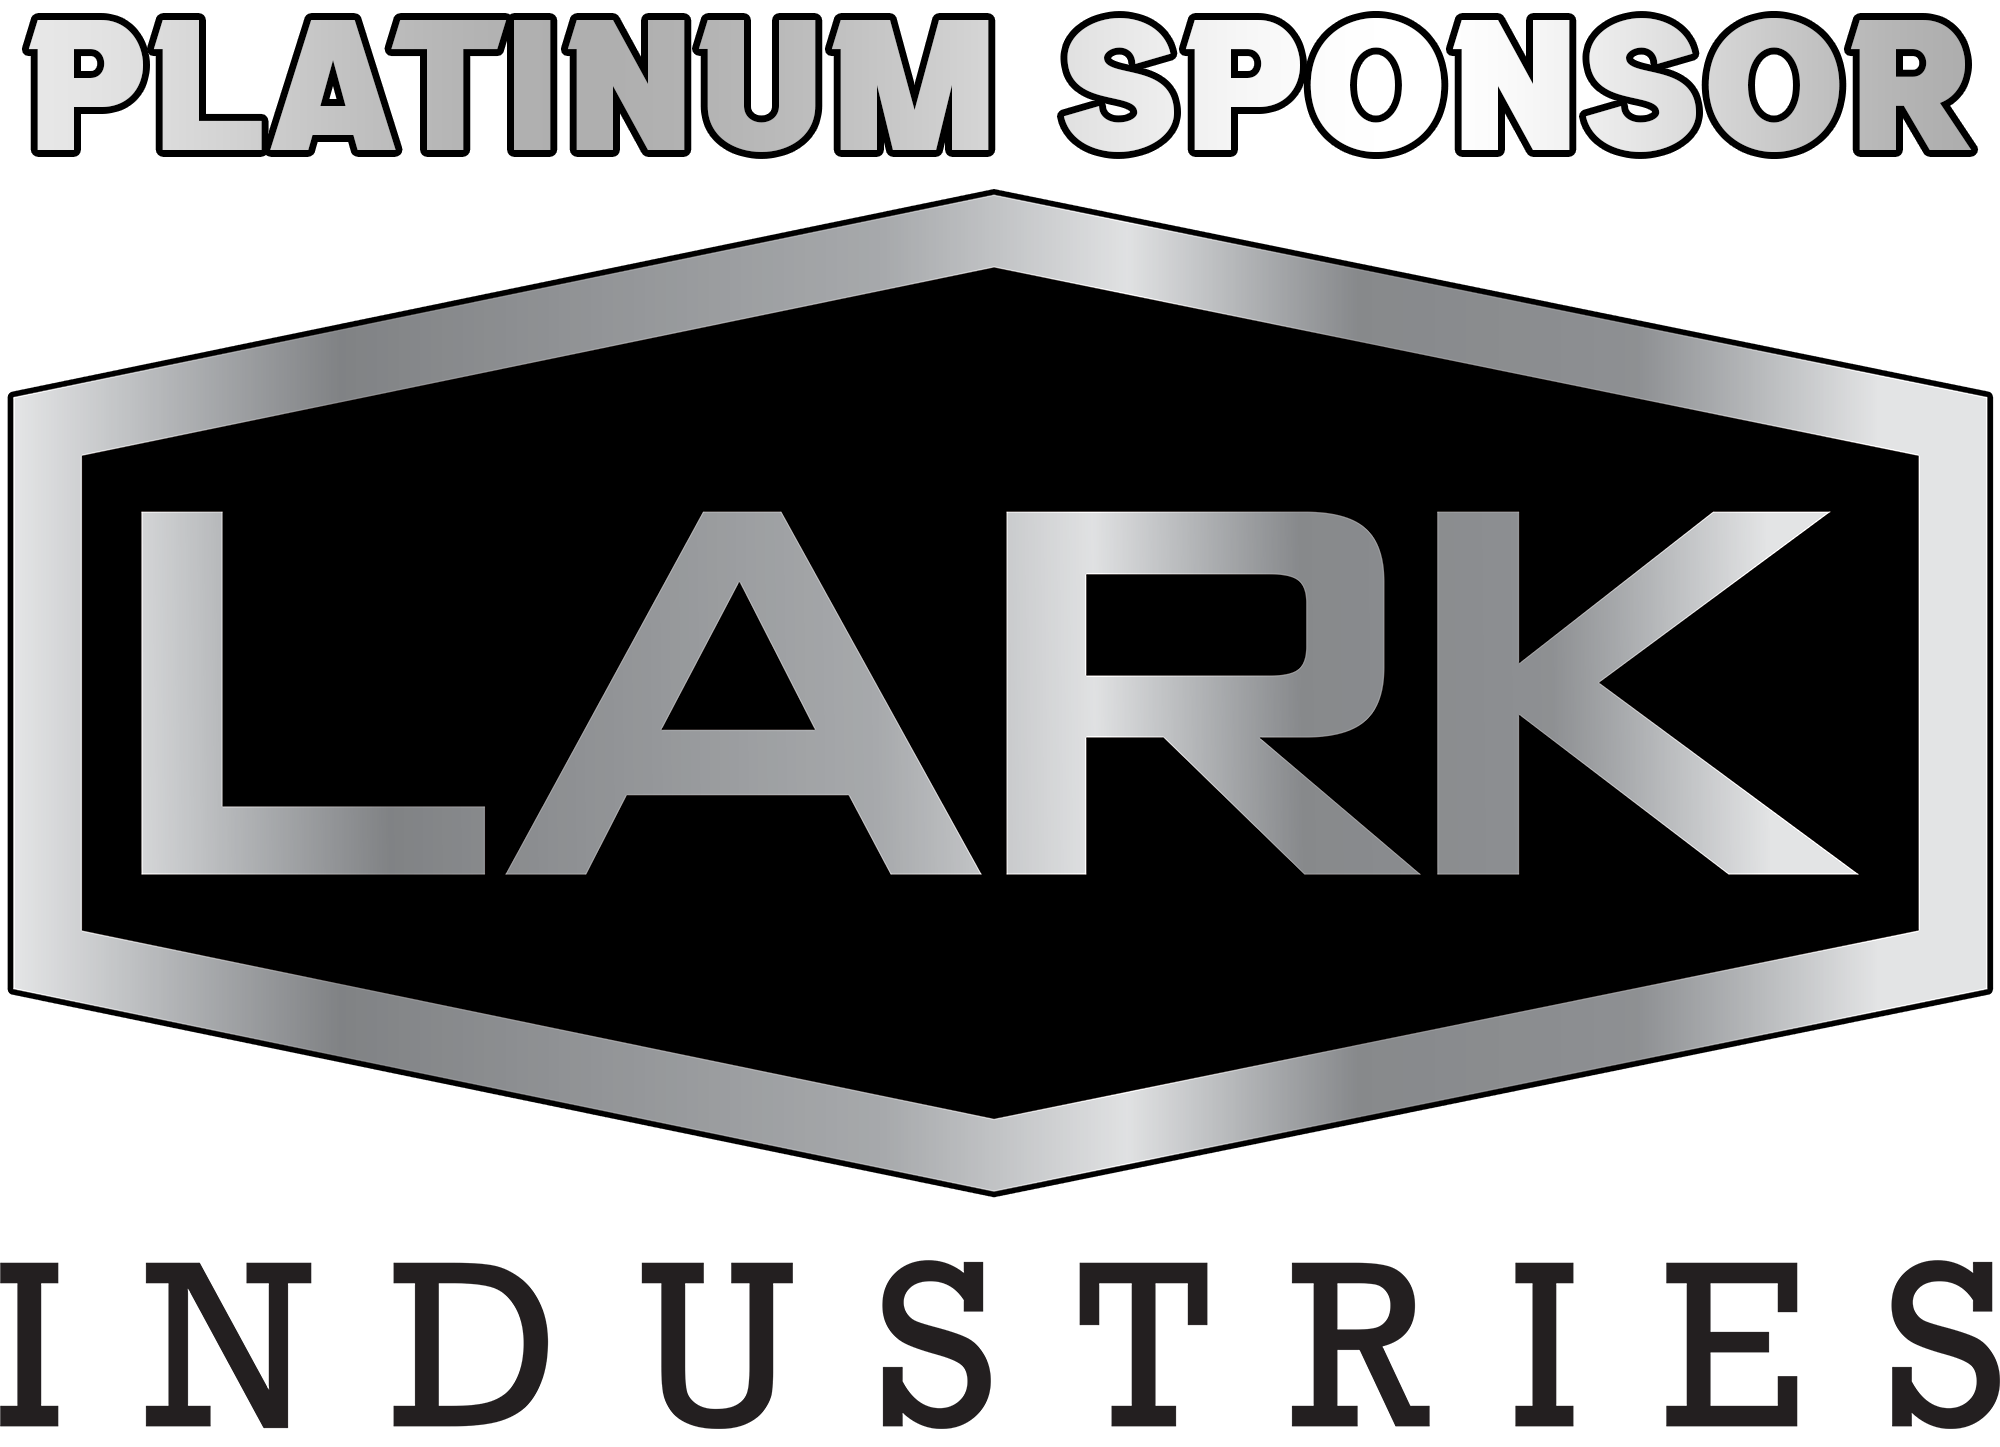 Lark - Platinum Sponsor